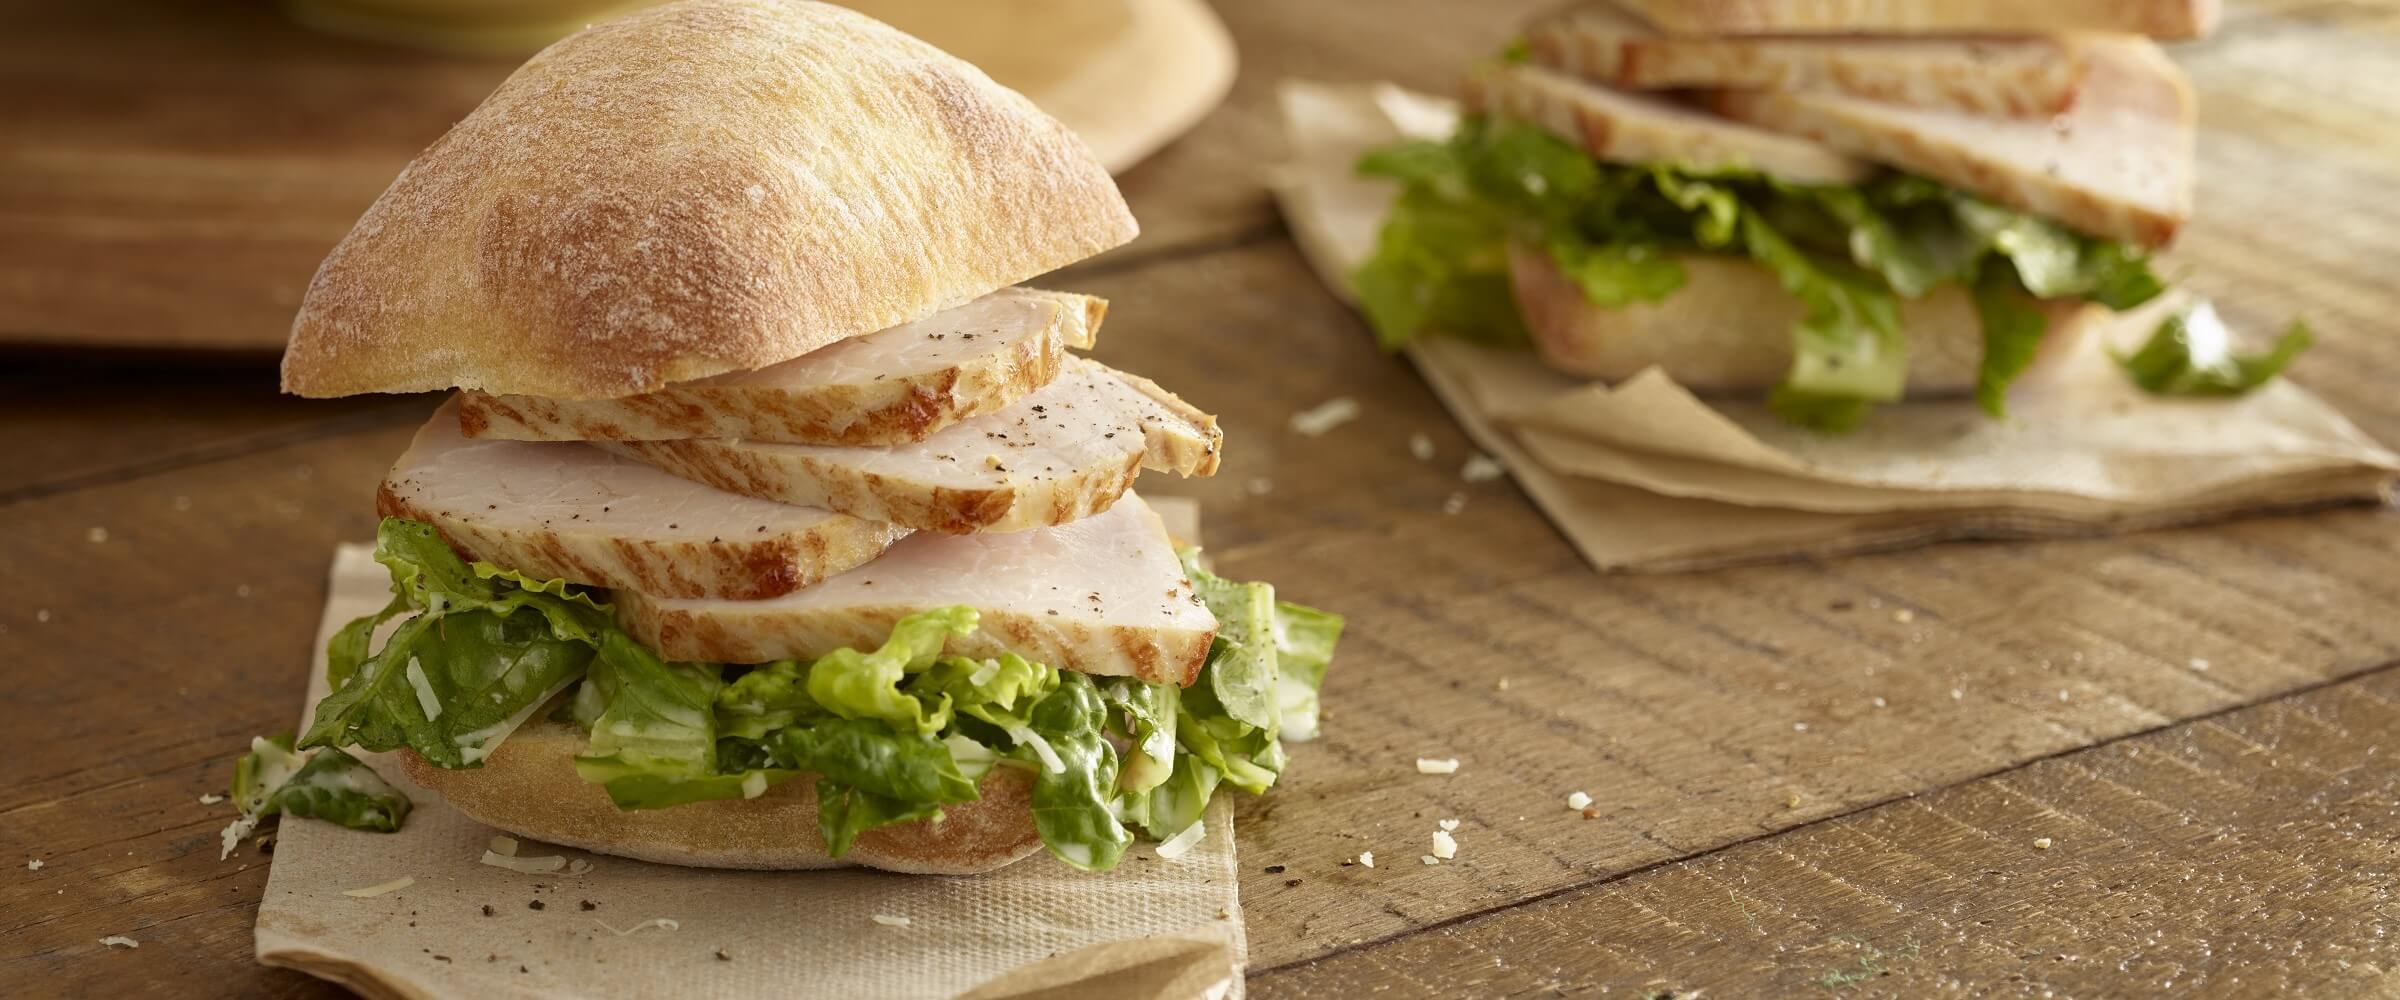 caesar pork loin sandwich on tan napkin on wood table